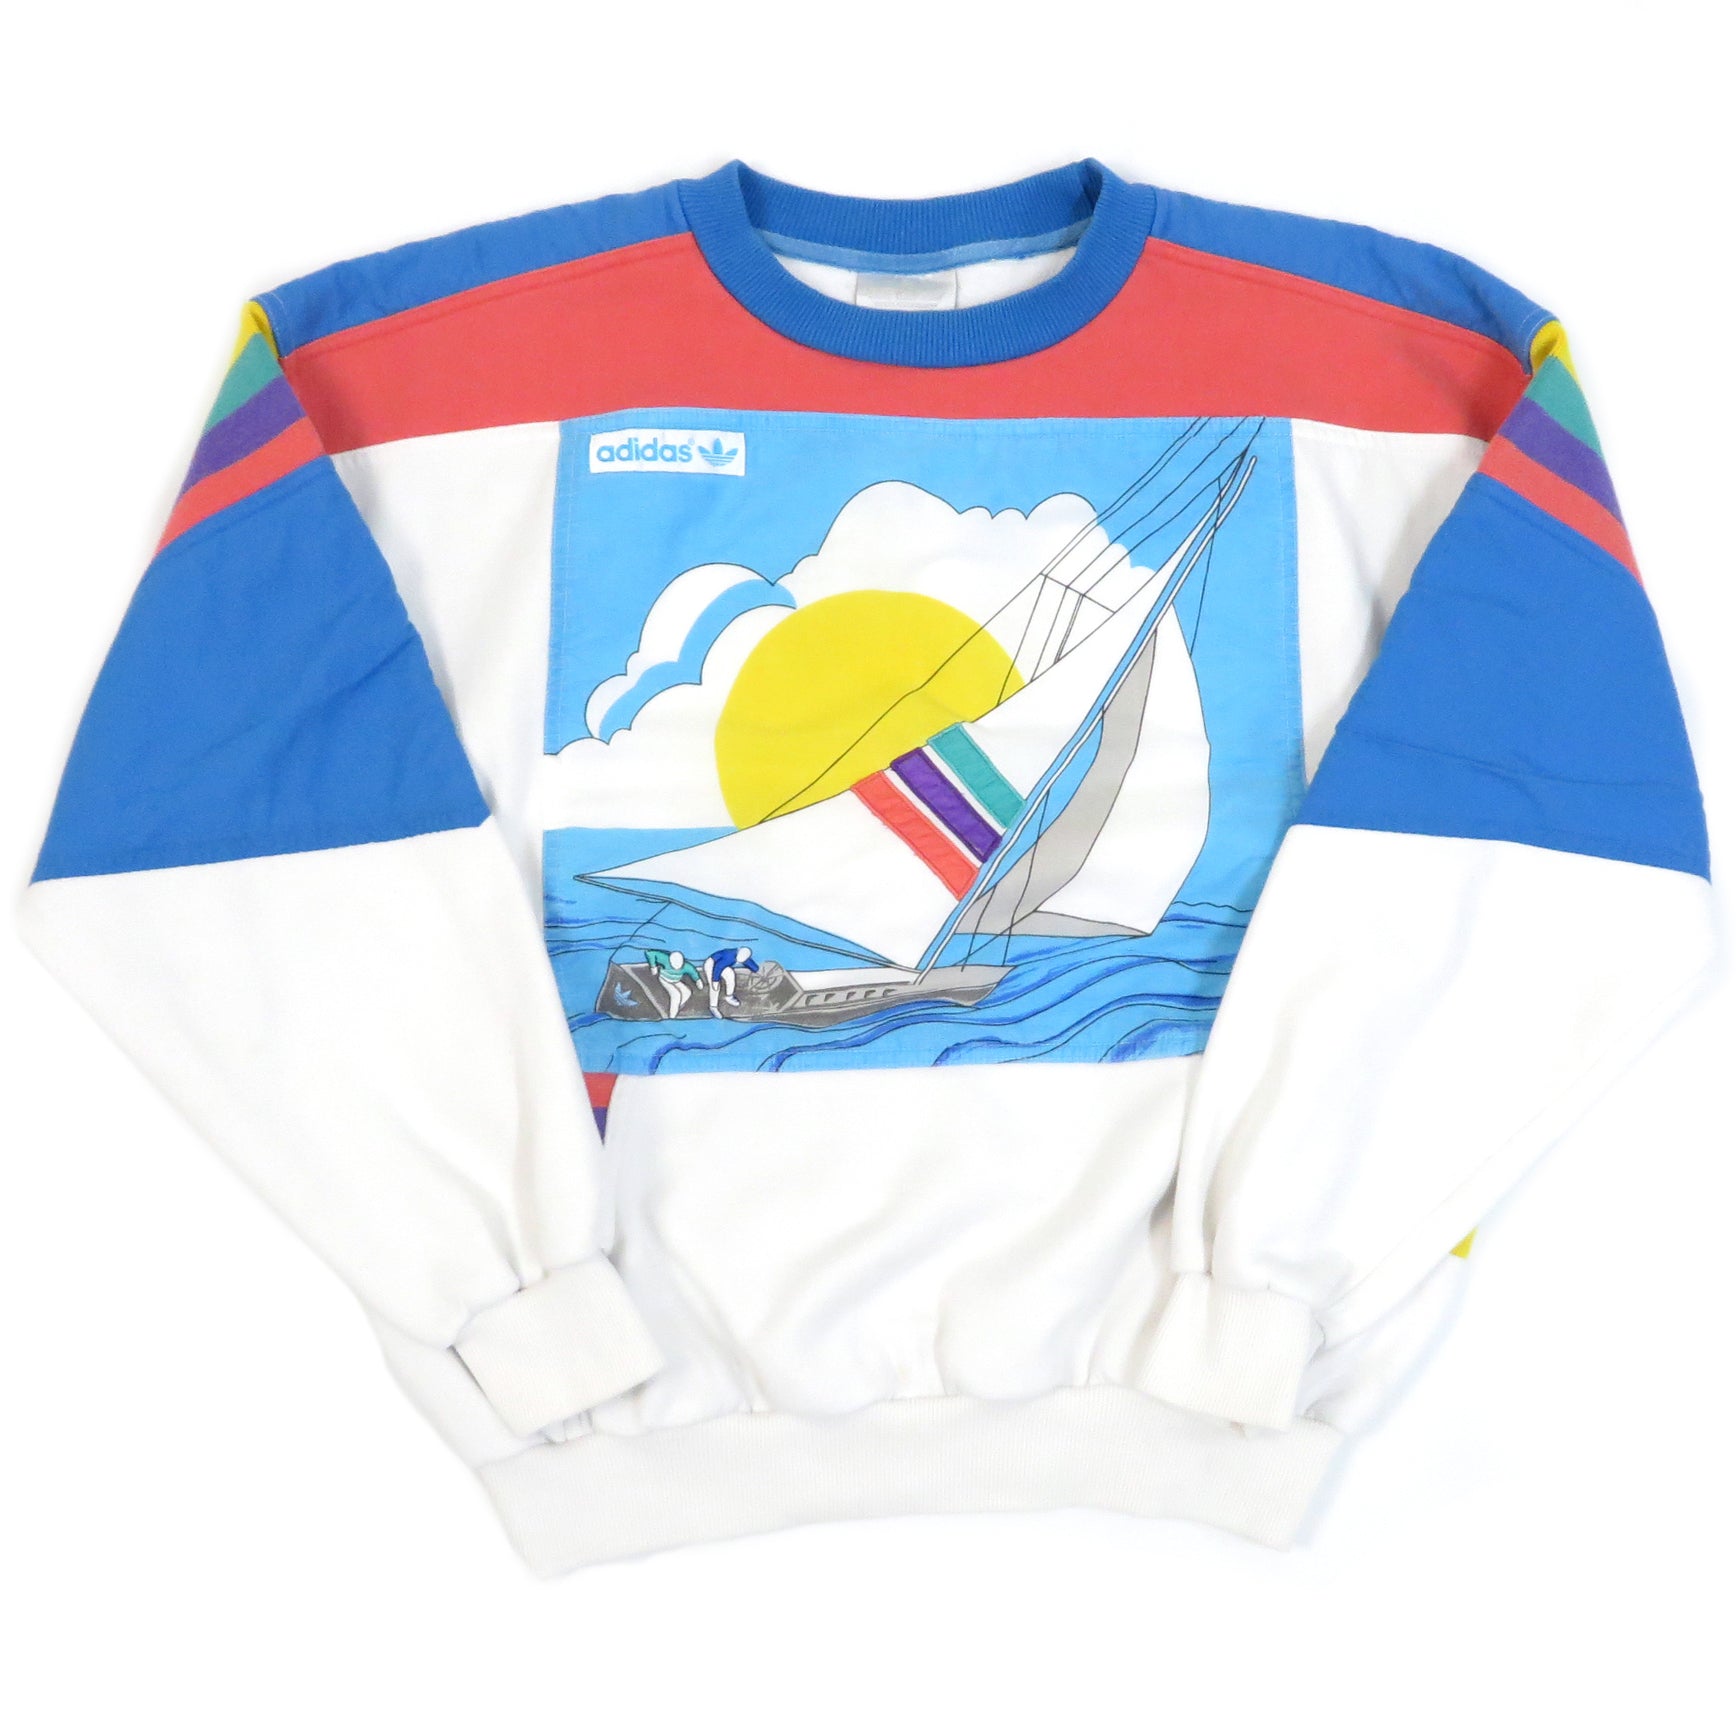 Vintage Adidas Regatta Sailing T-shirt – For All To Envy